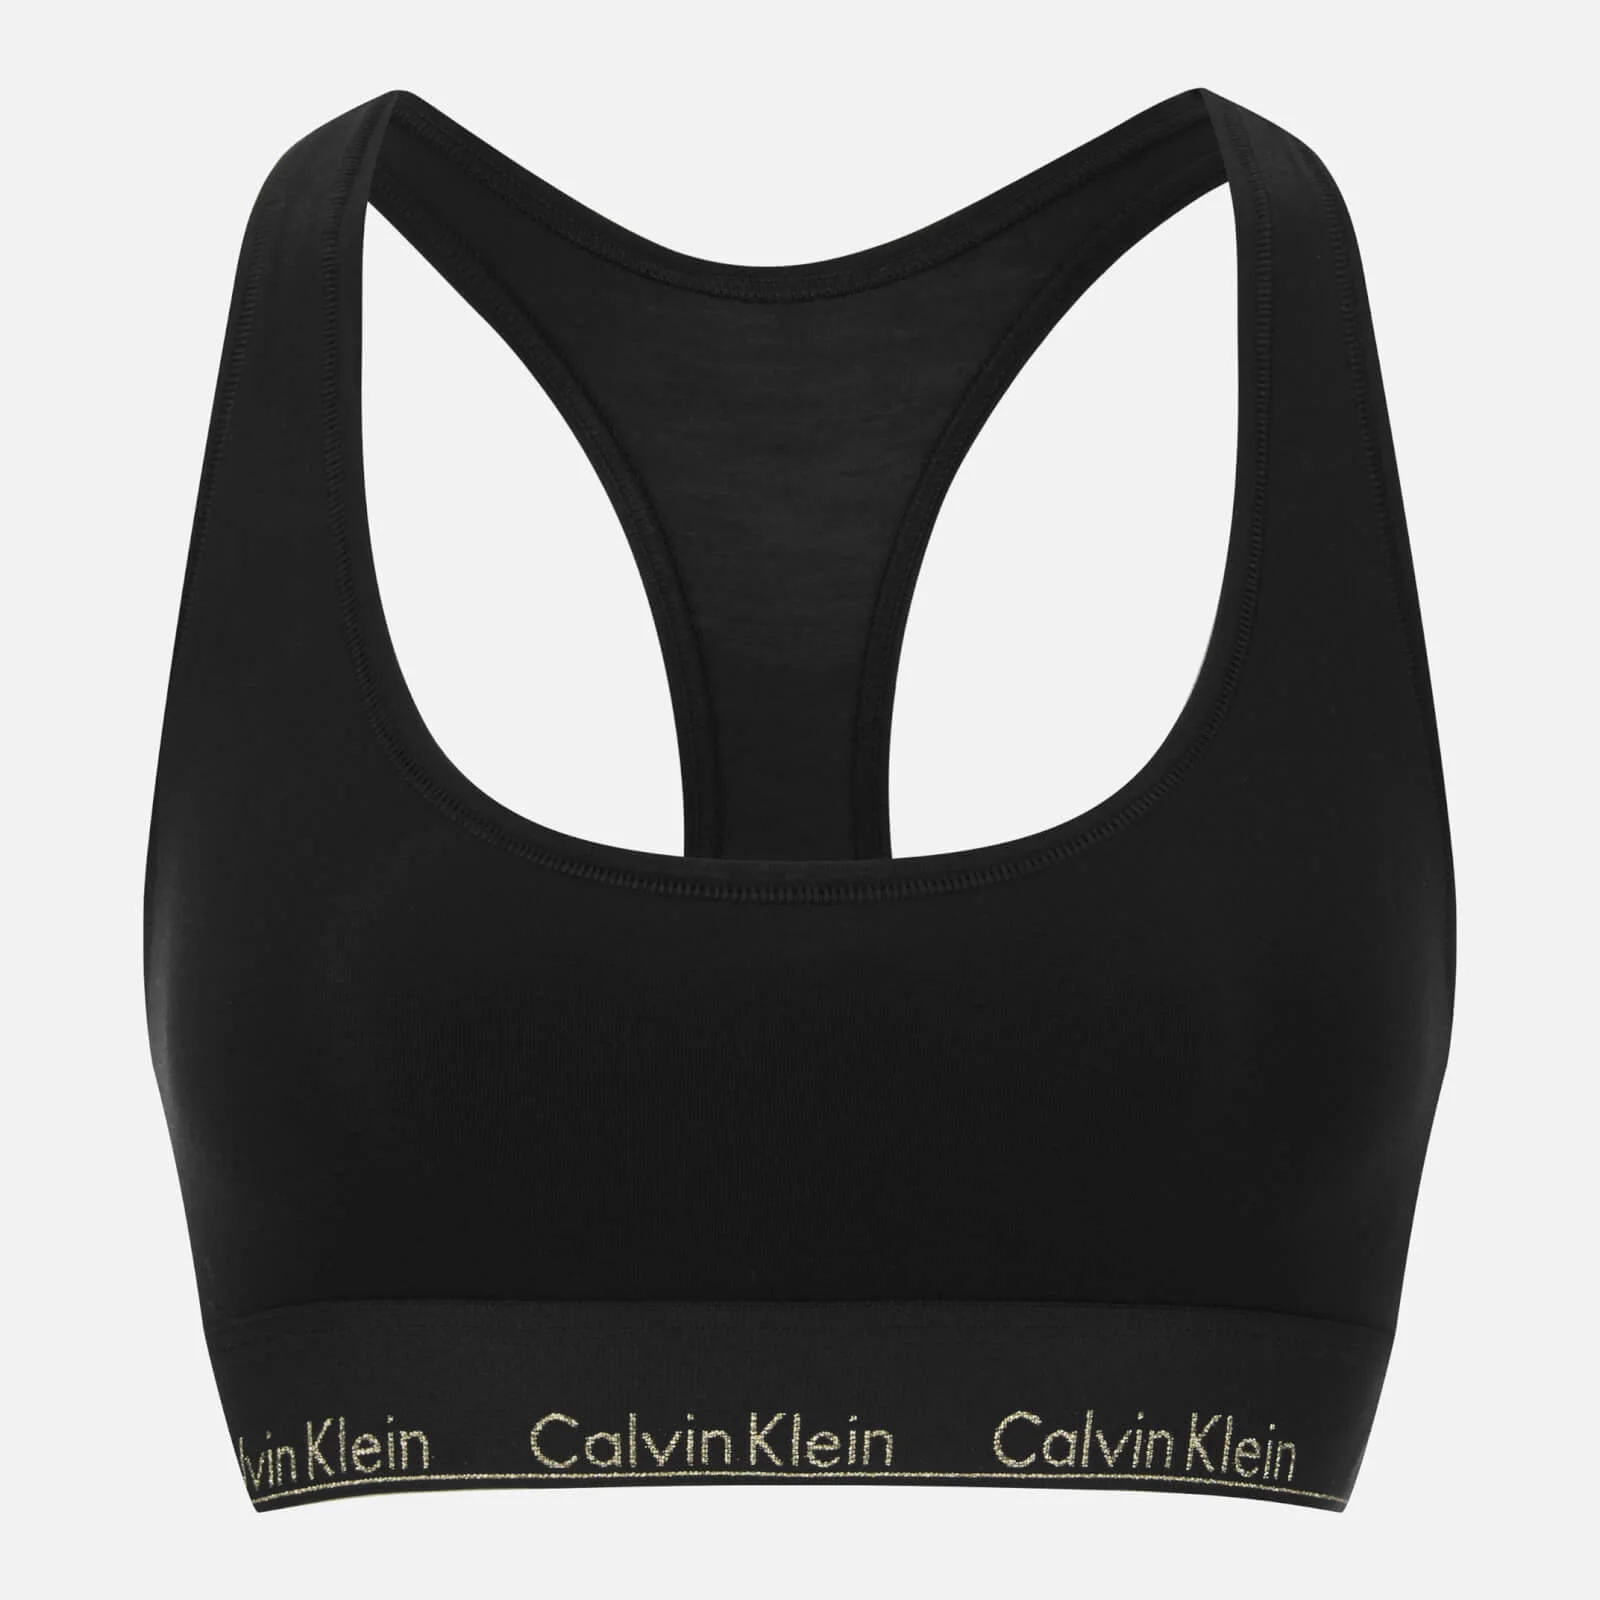 Calvin Klein Women's Unlined Bralette - Black Image 1